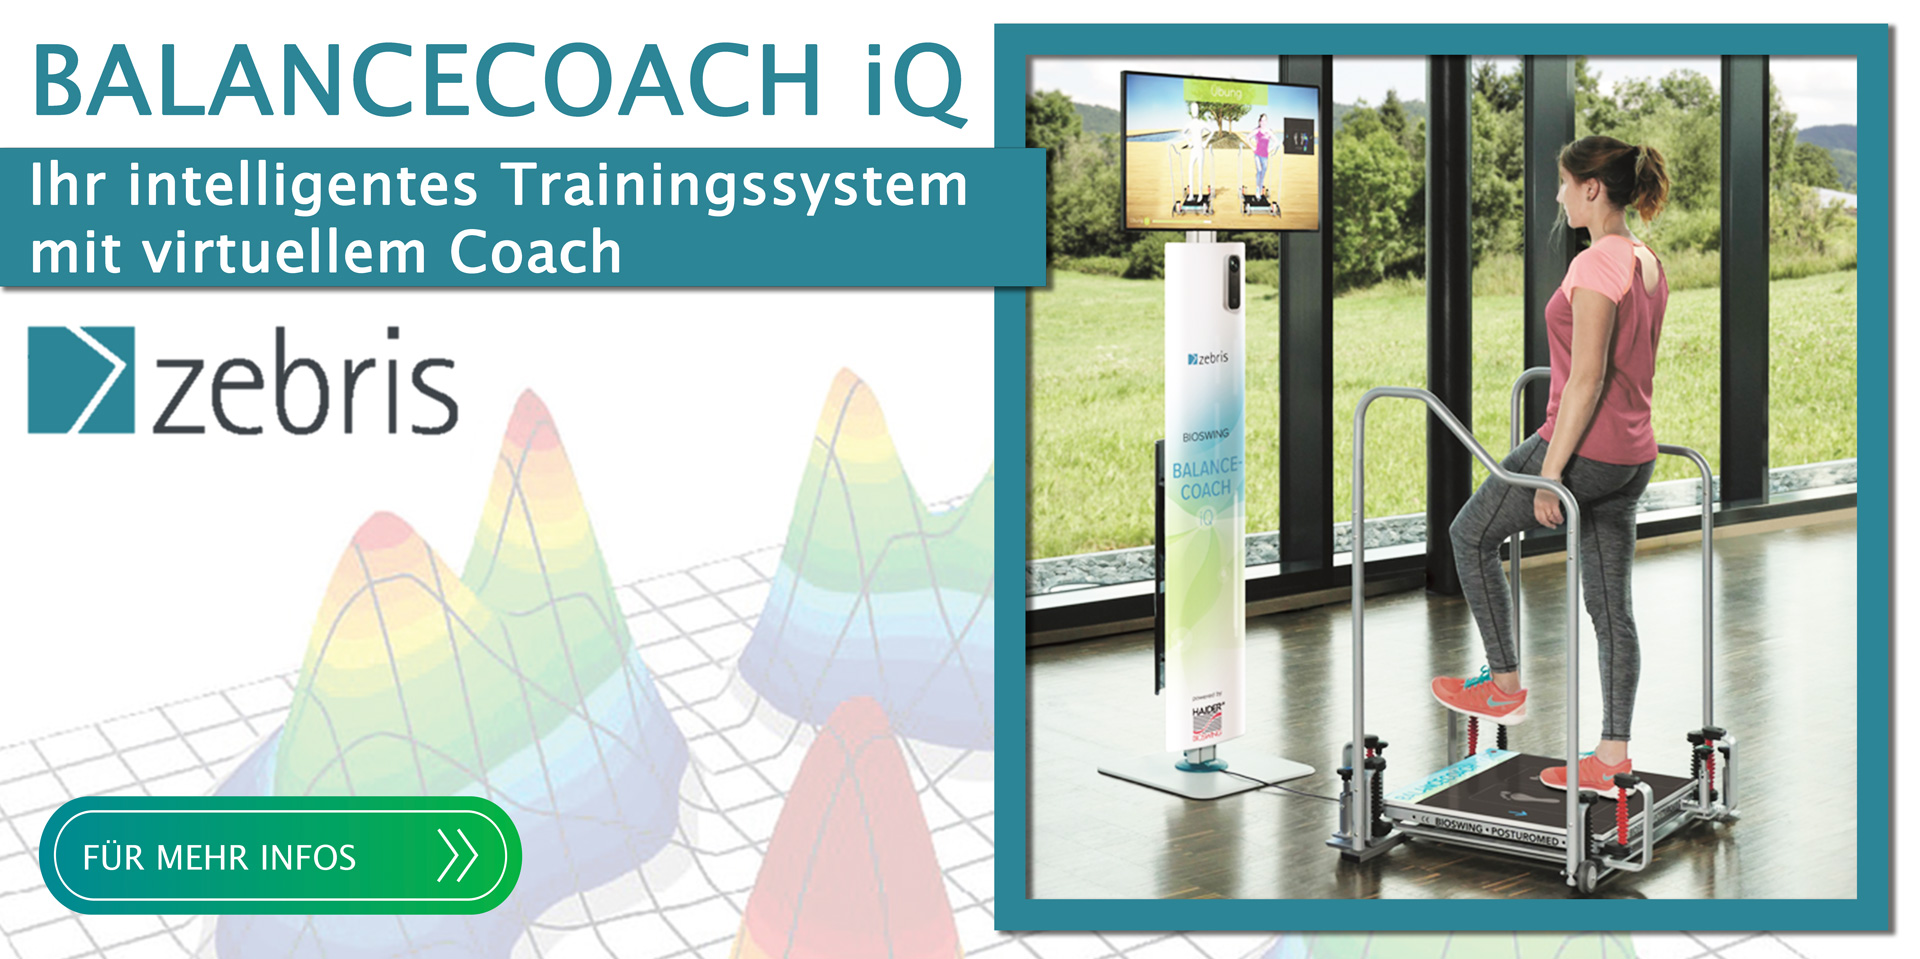 BALANCECOACH iQ - intelligentes Trainingssystem mit virtuellem Coach